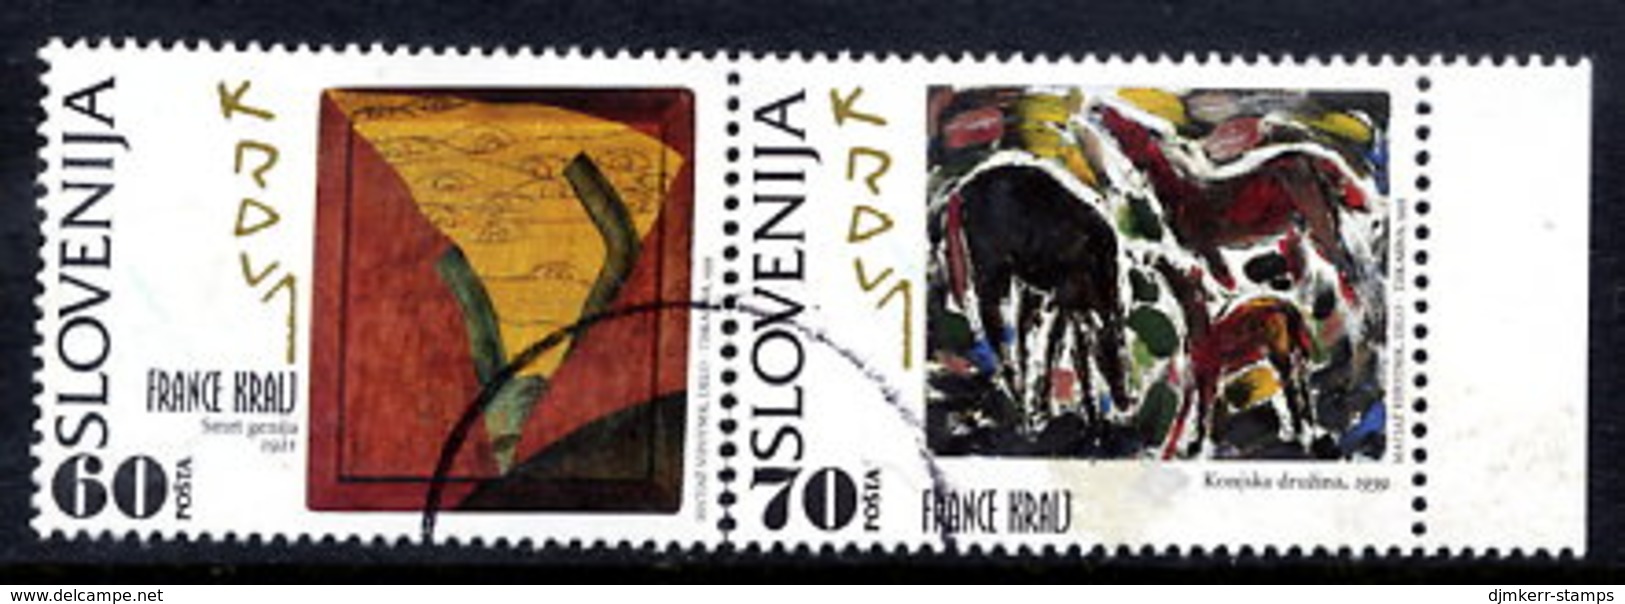 SLOVENIA 1995 France Kralj Centenary Pair.used.  Michel 121-22 - Slovenia